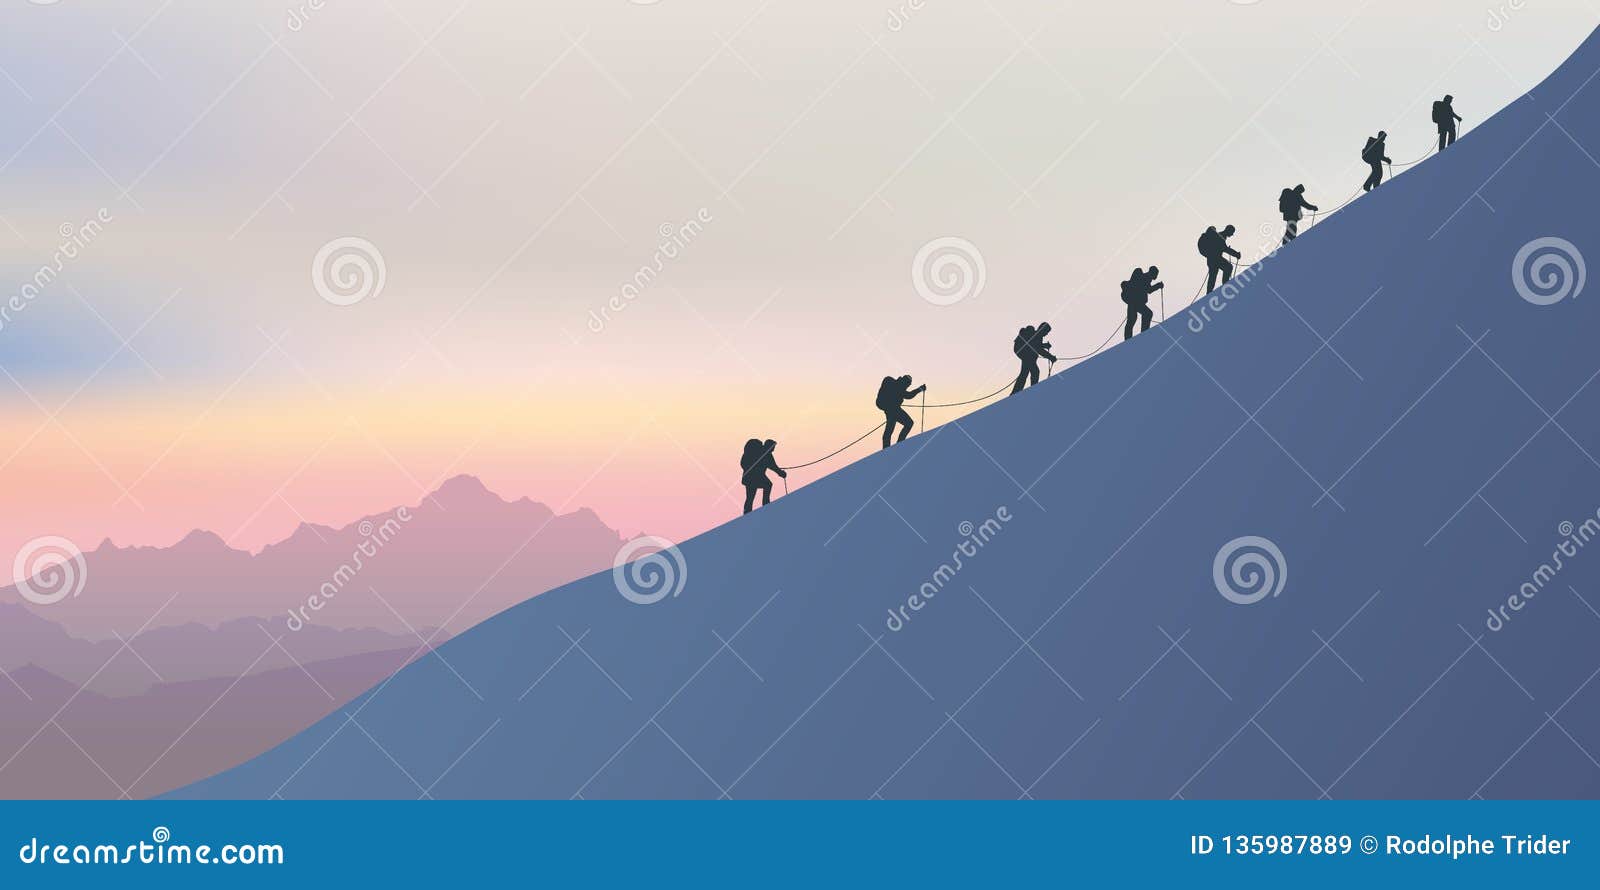 roped mountaineers climb a mountain along a ridge